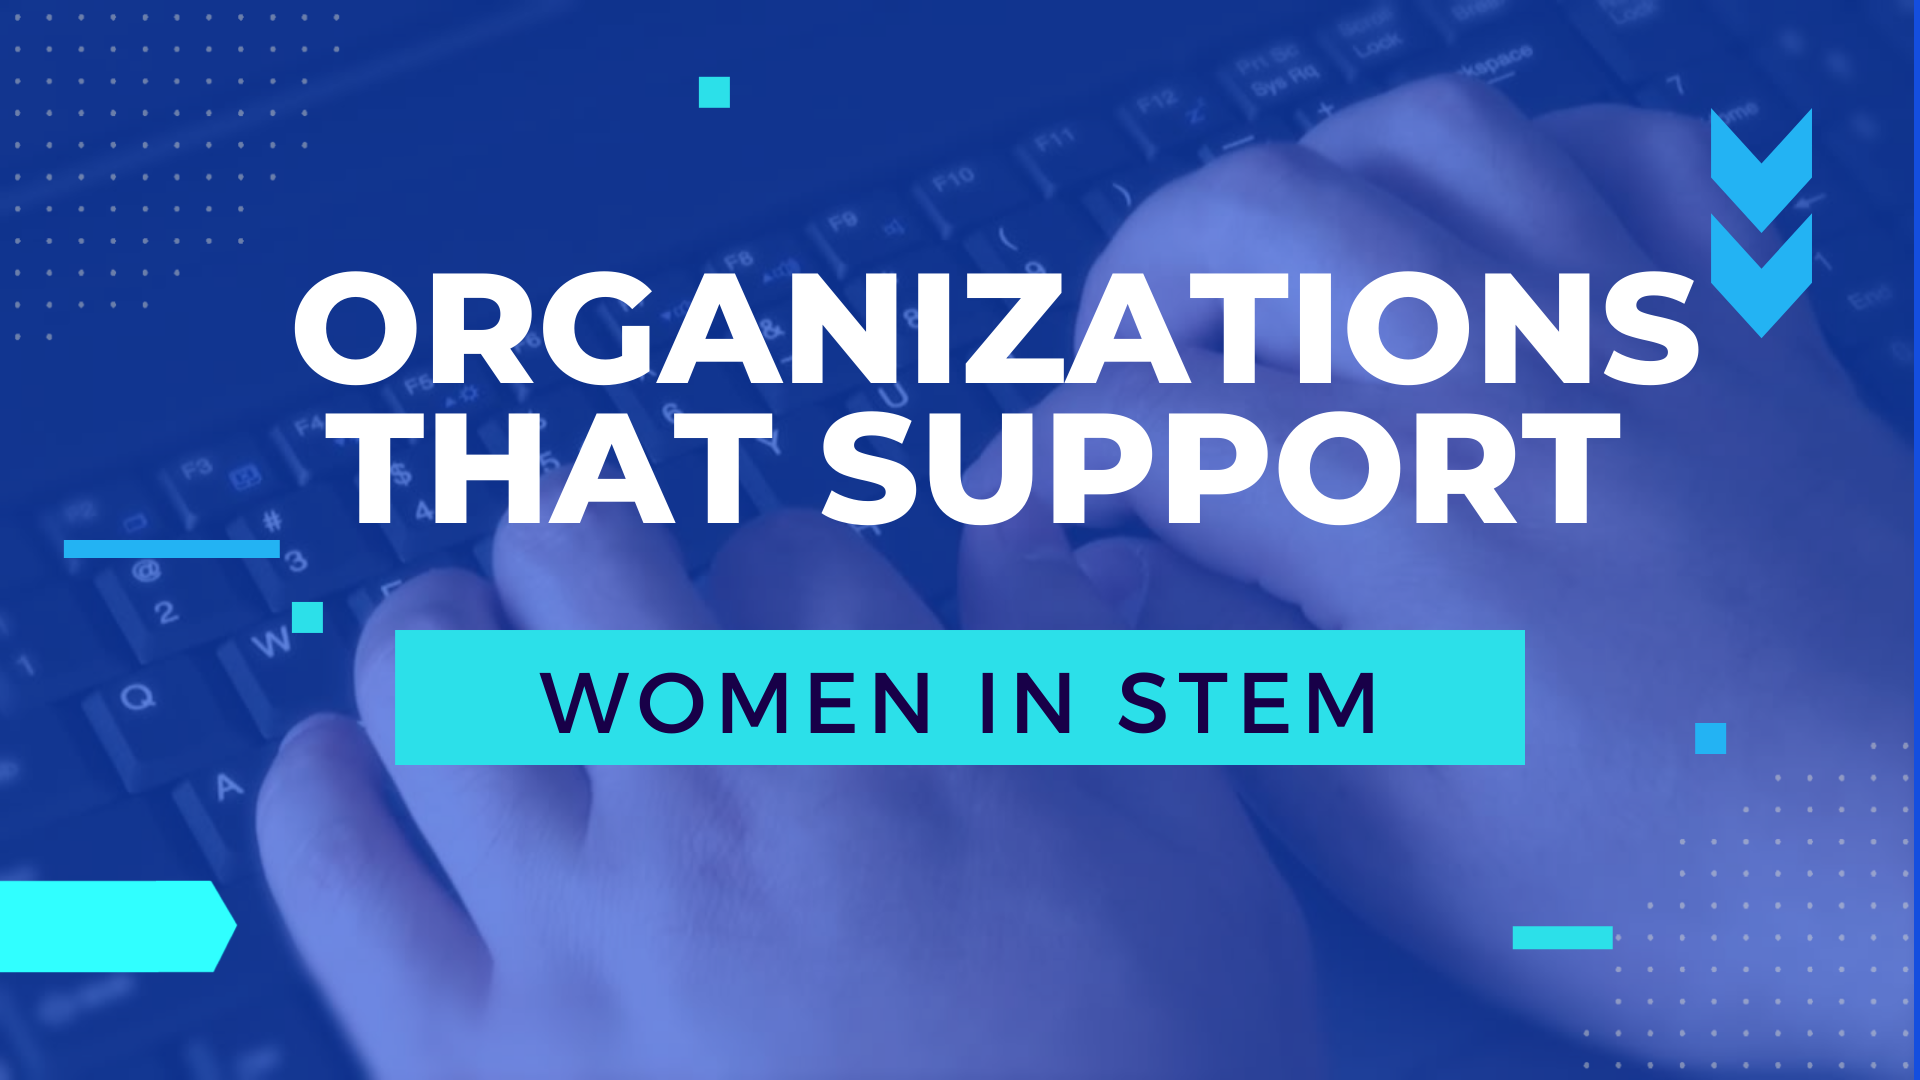 Organizations that support women in stem